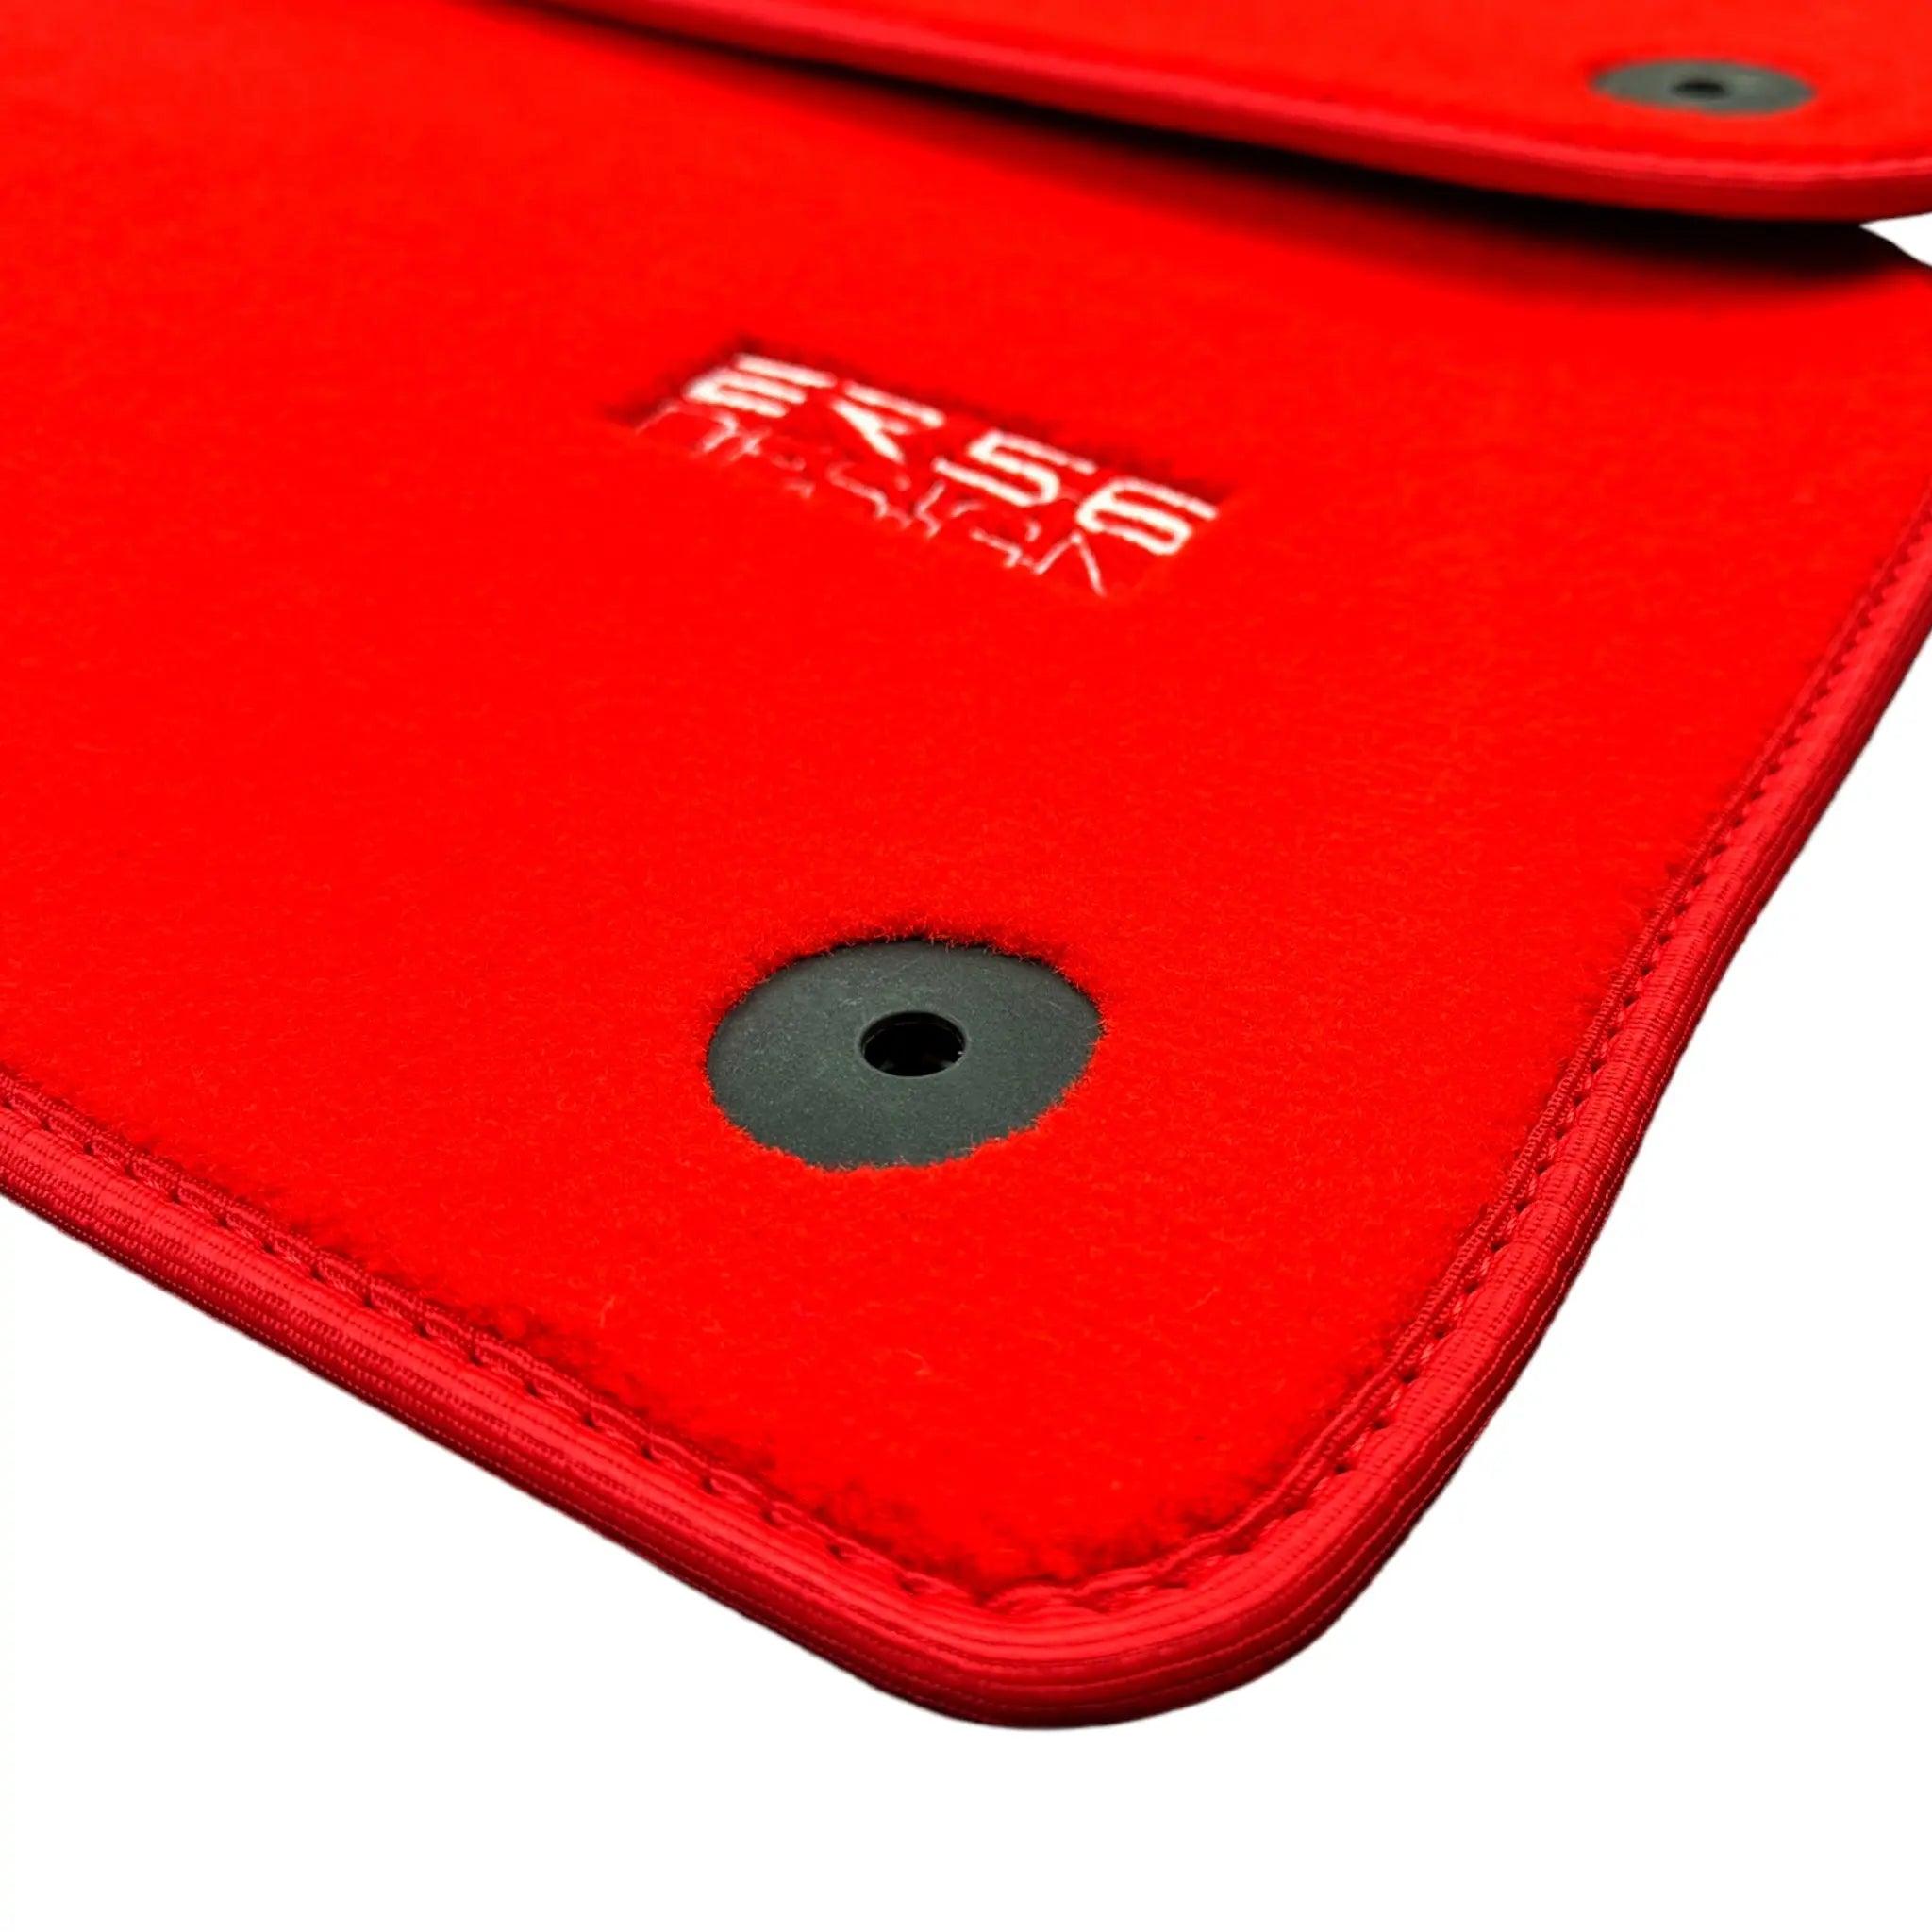 Red Floor Mats for Audi A8 D3 Long (2002-2010) | ER56 Design